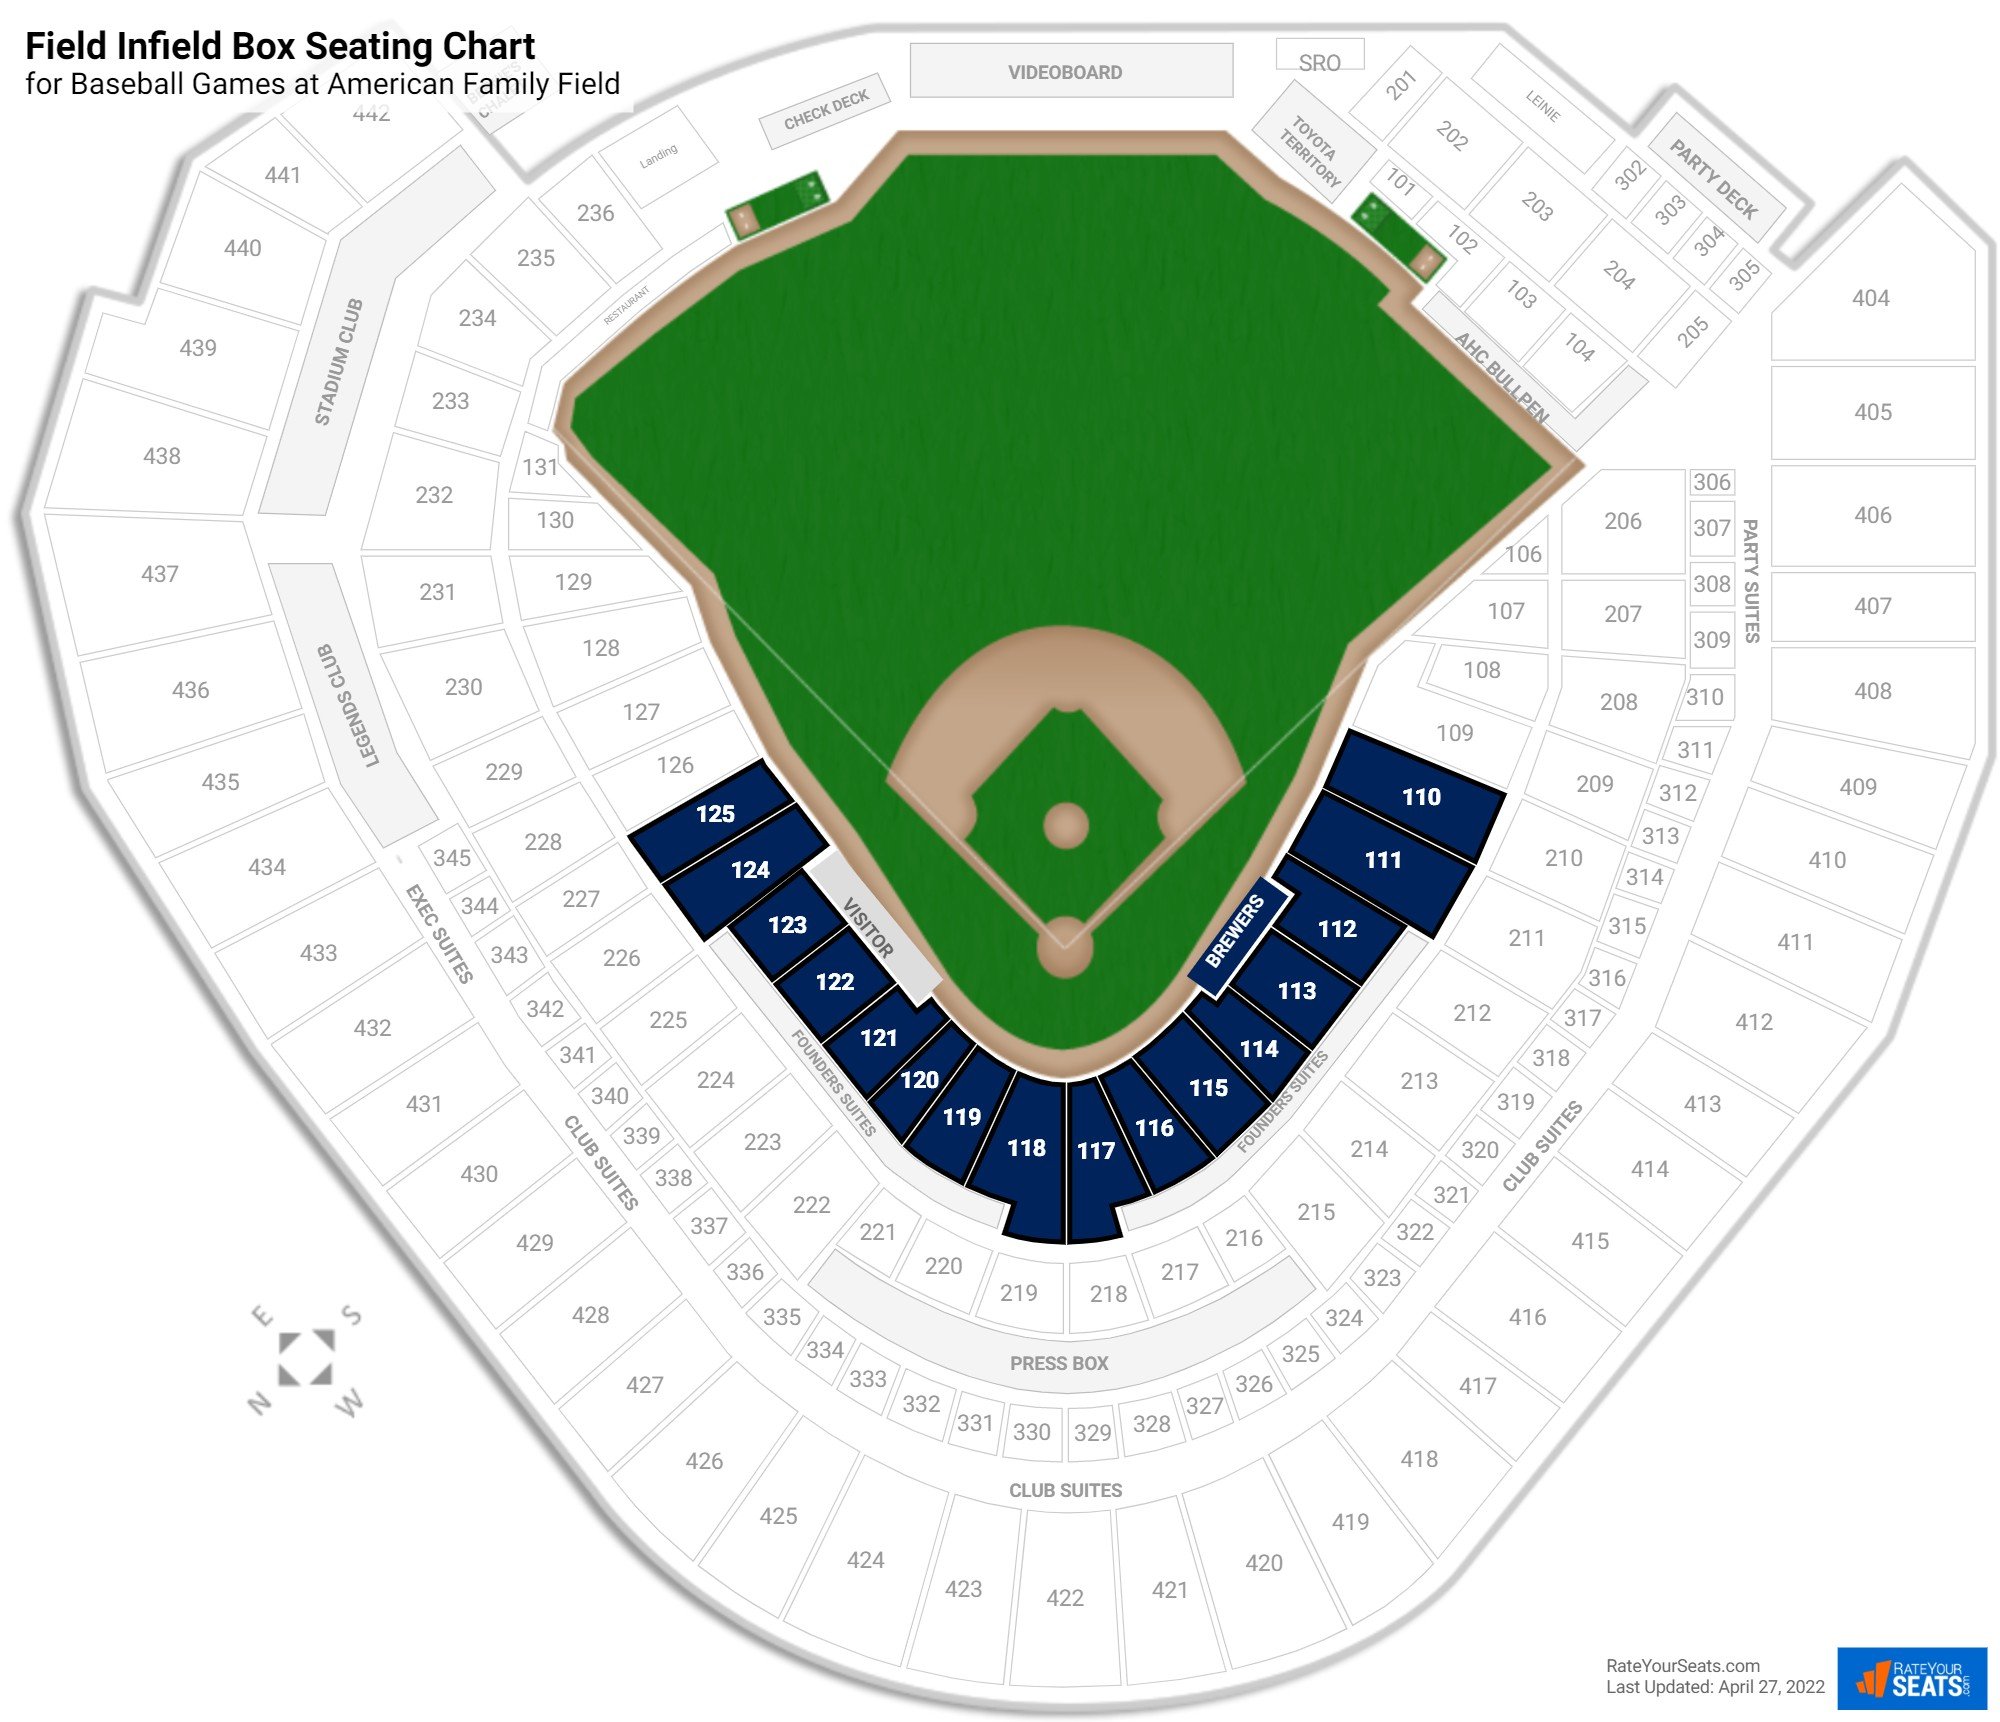 Baseball Field Infield Box Seating Chart at American Family Field